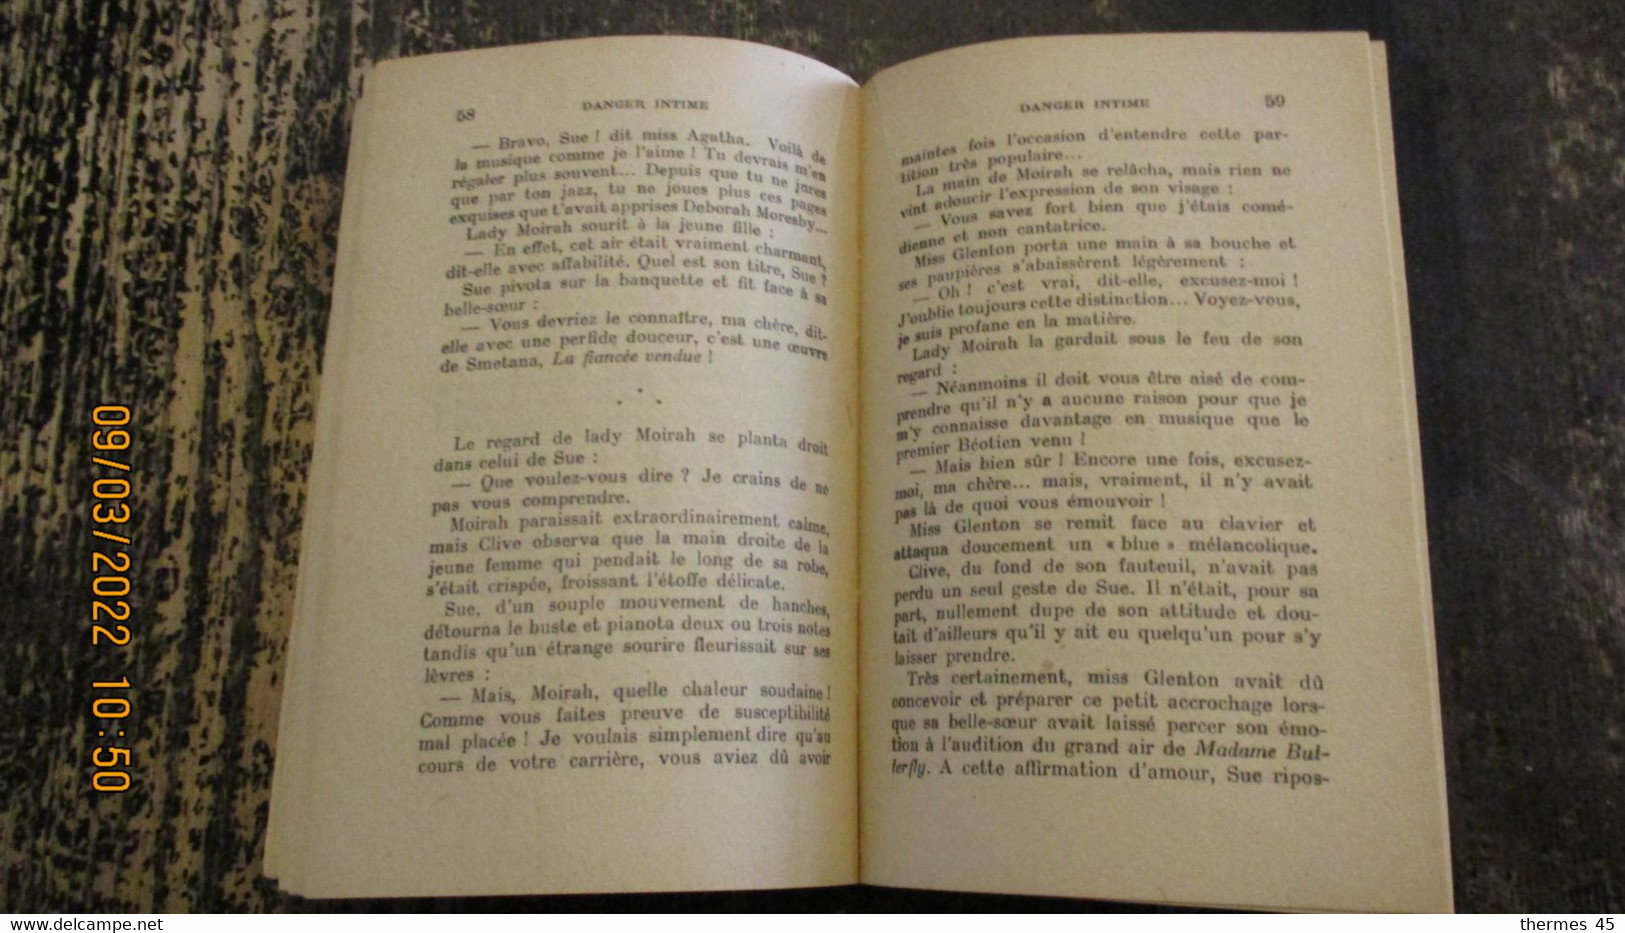 DEDICACE / ENDREBE / DANGER INTIME / 1948 LE PORTULAN - LA MAUVAISE CHANCE